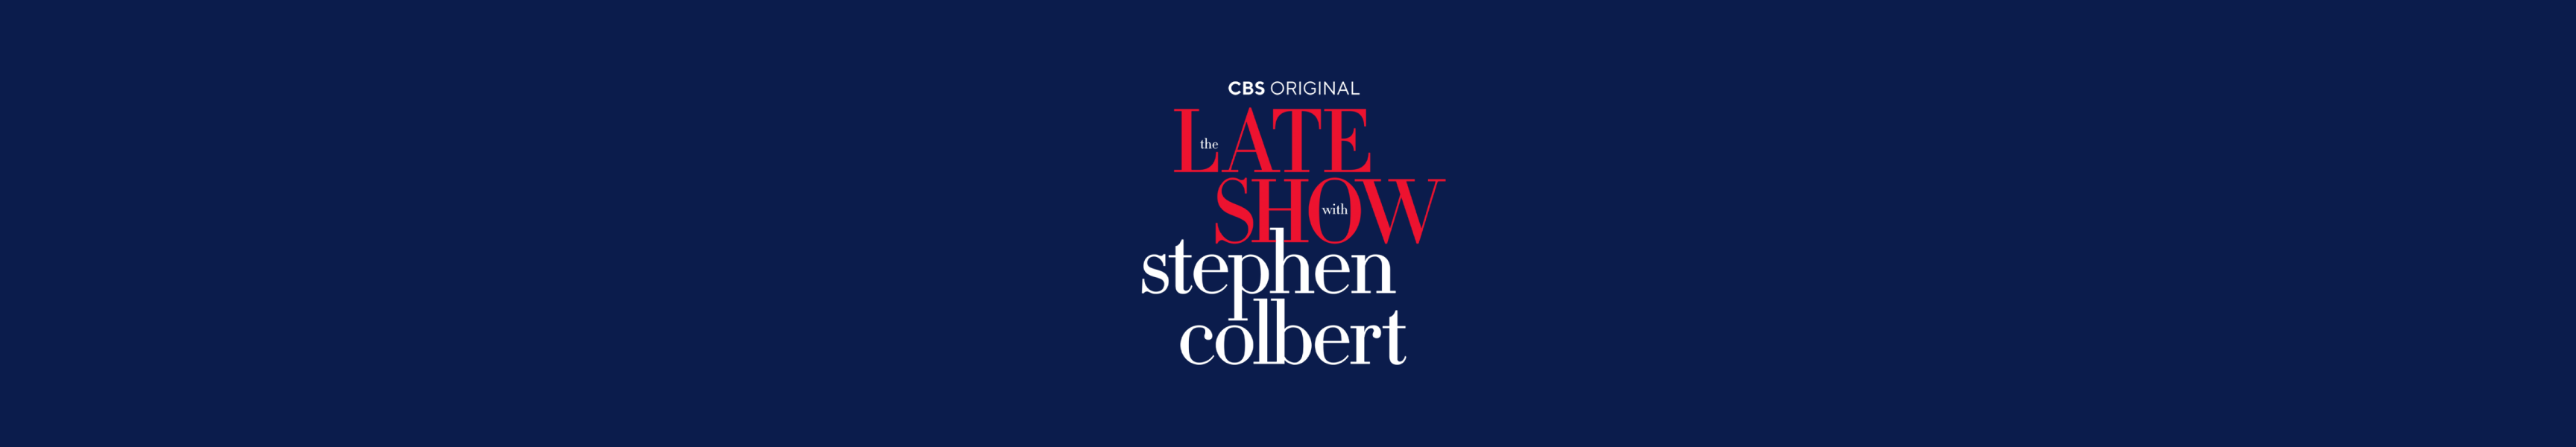 Late Show con Stephen Colbert